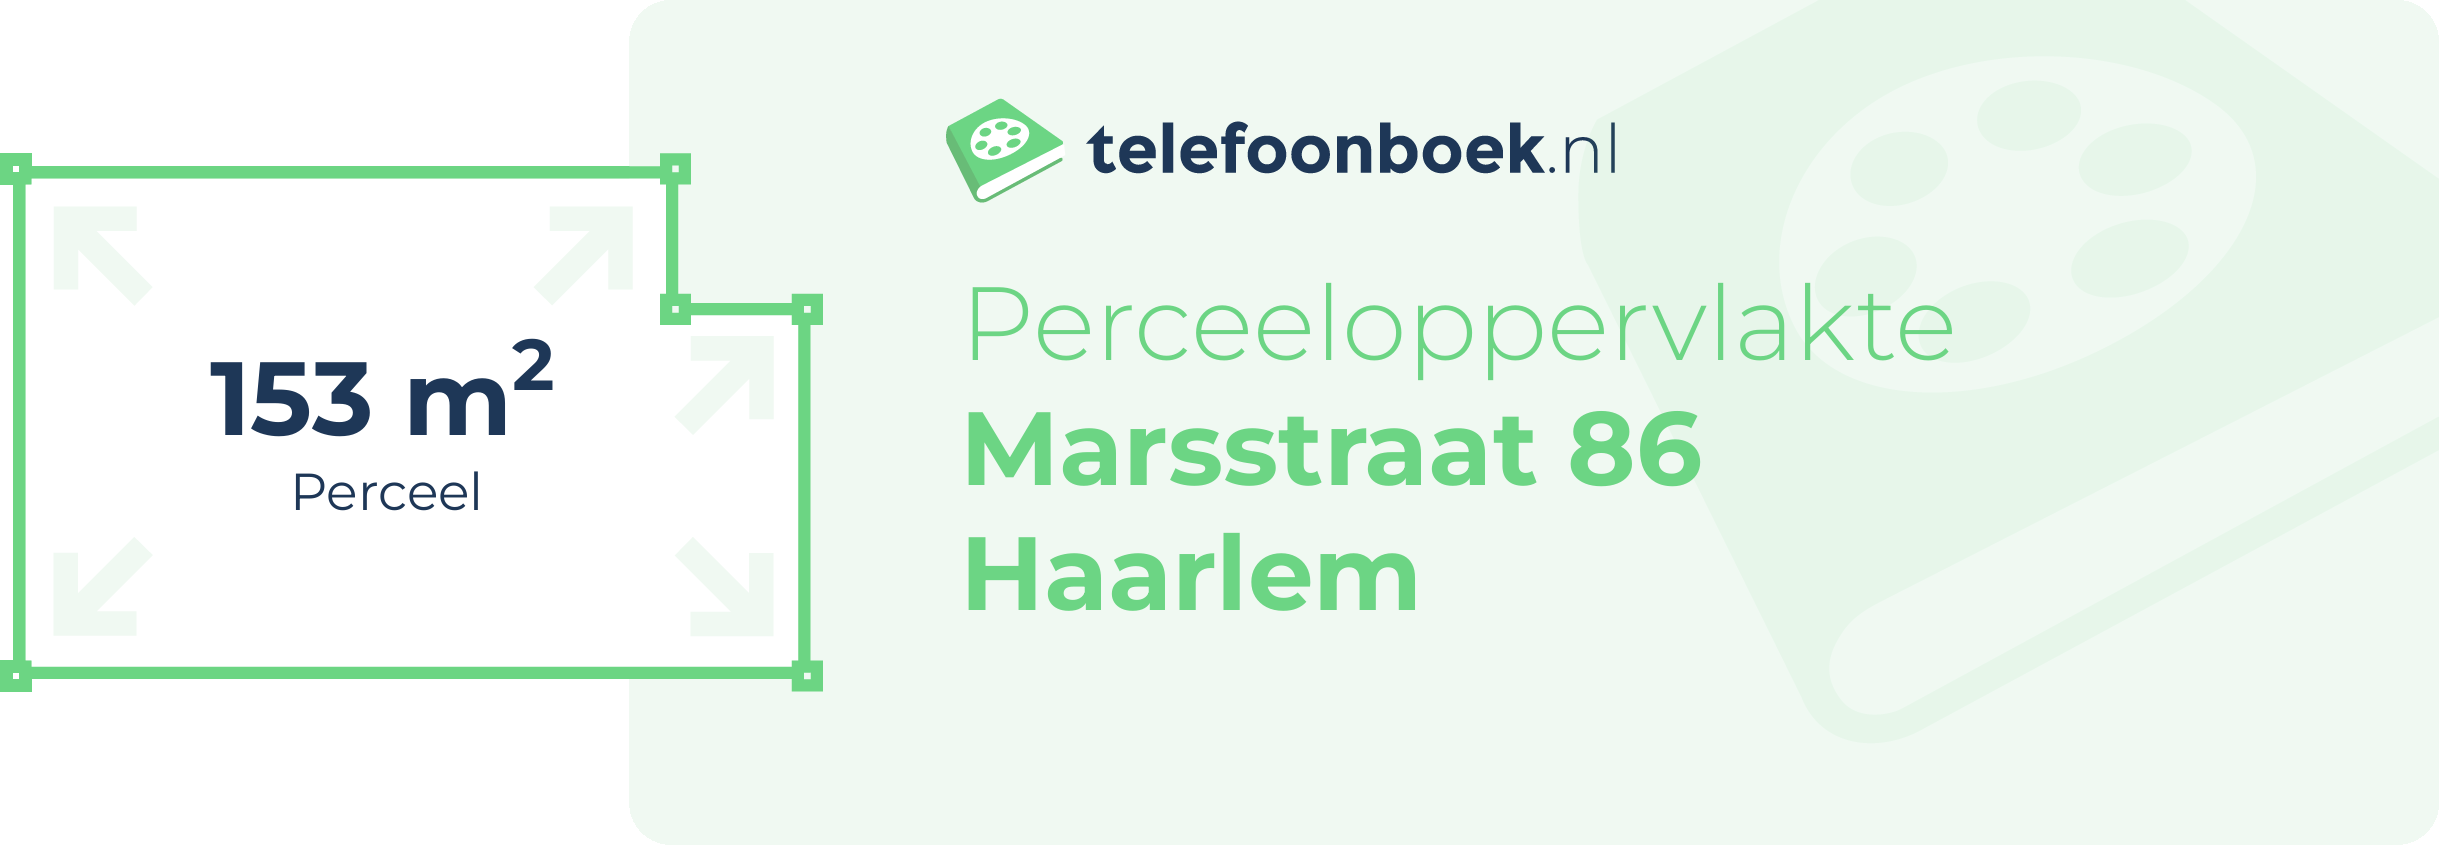 Perceeloppervlakte Marsstraat 86 Haarlem